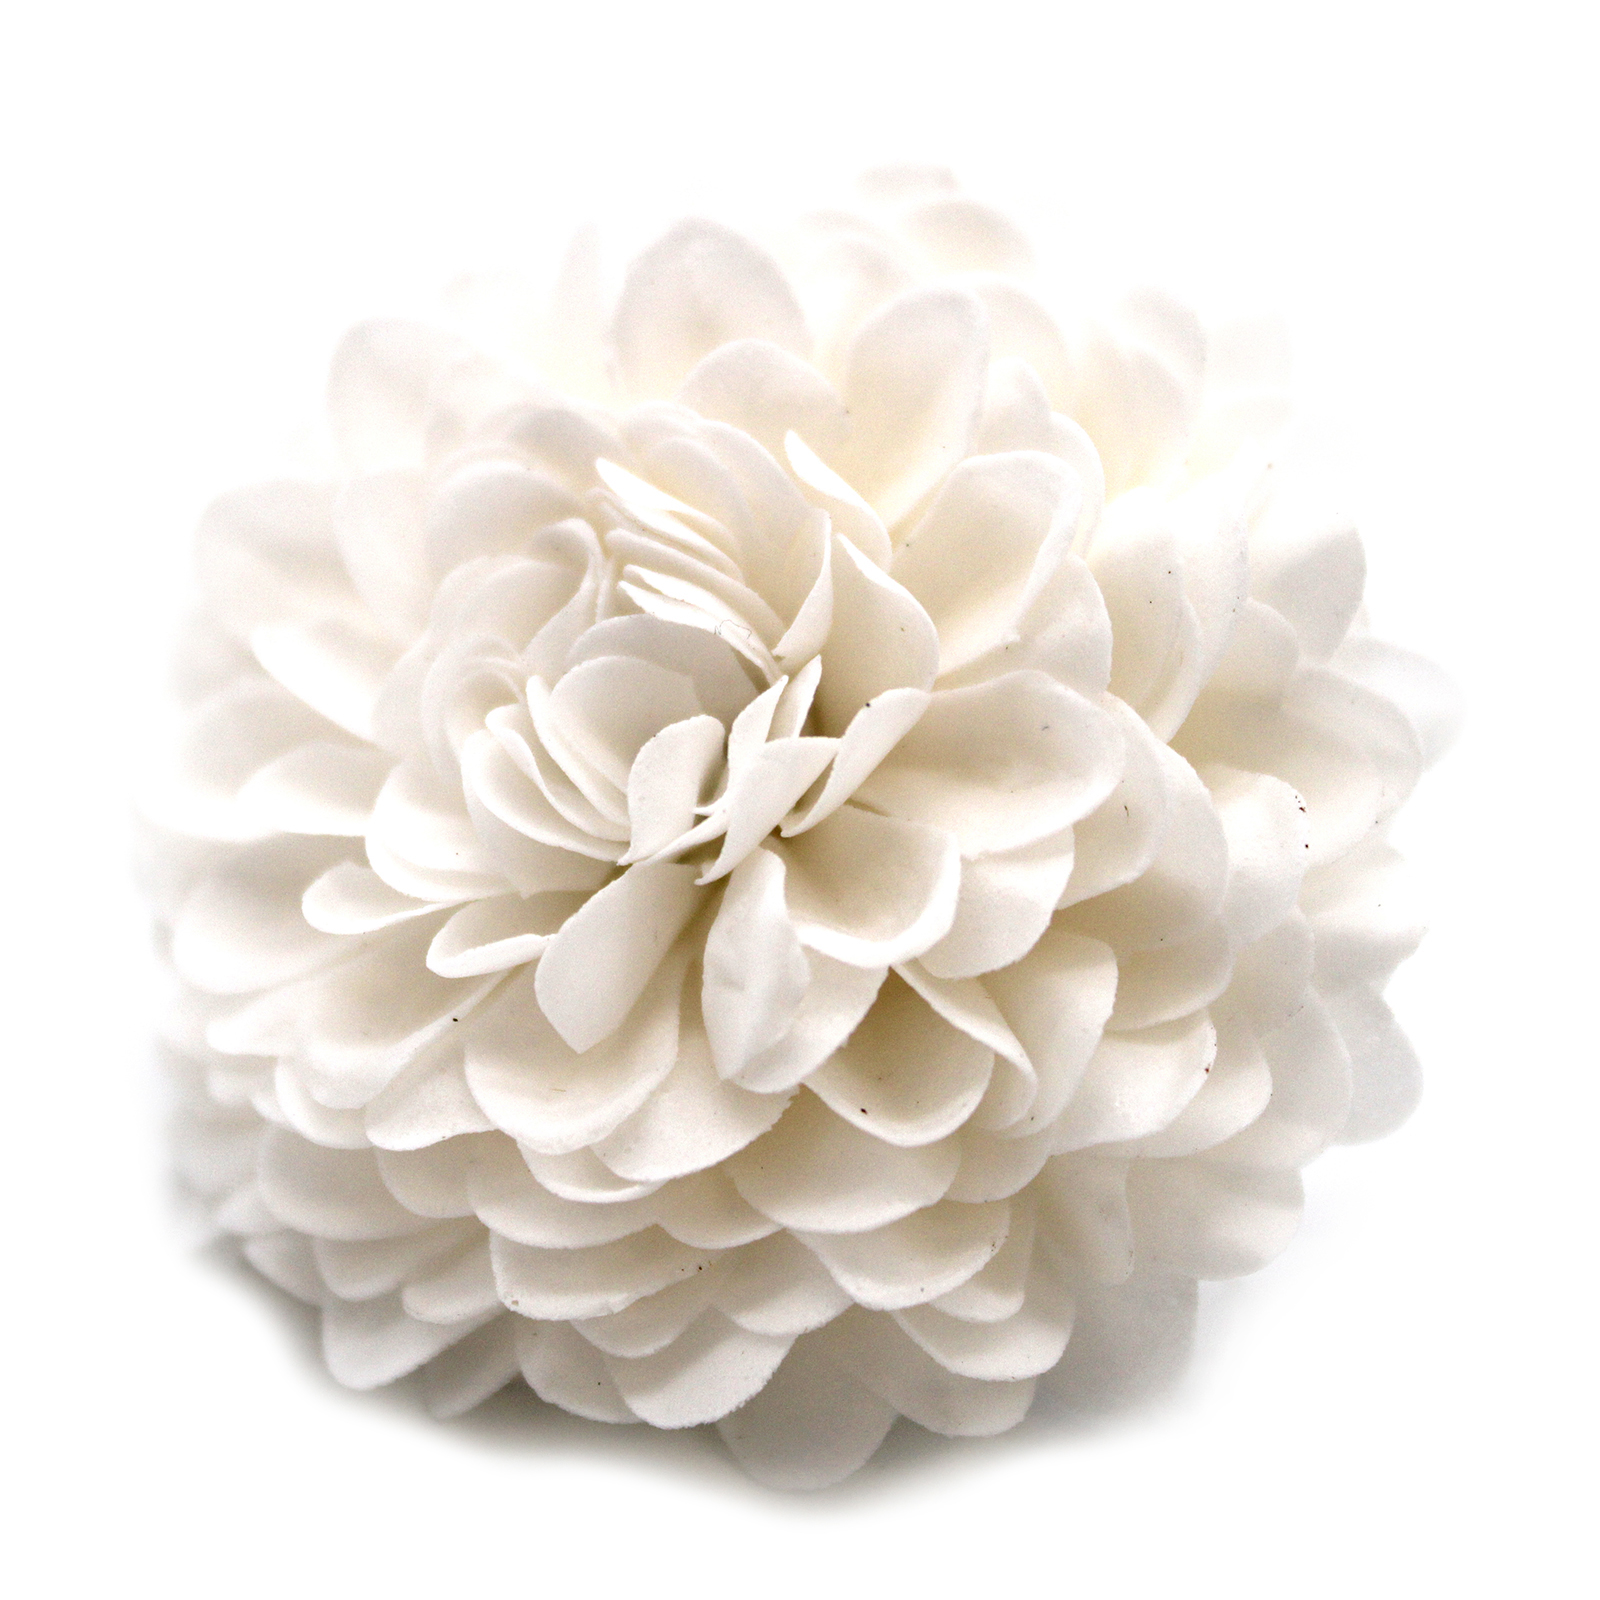 10 x Craft Soap Flowers - Small Chrysanthemum - White